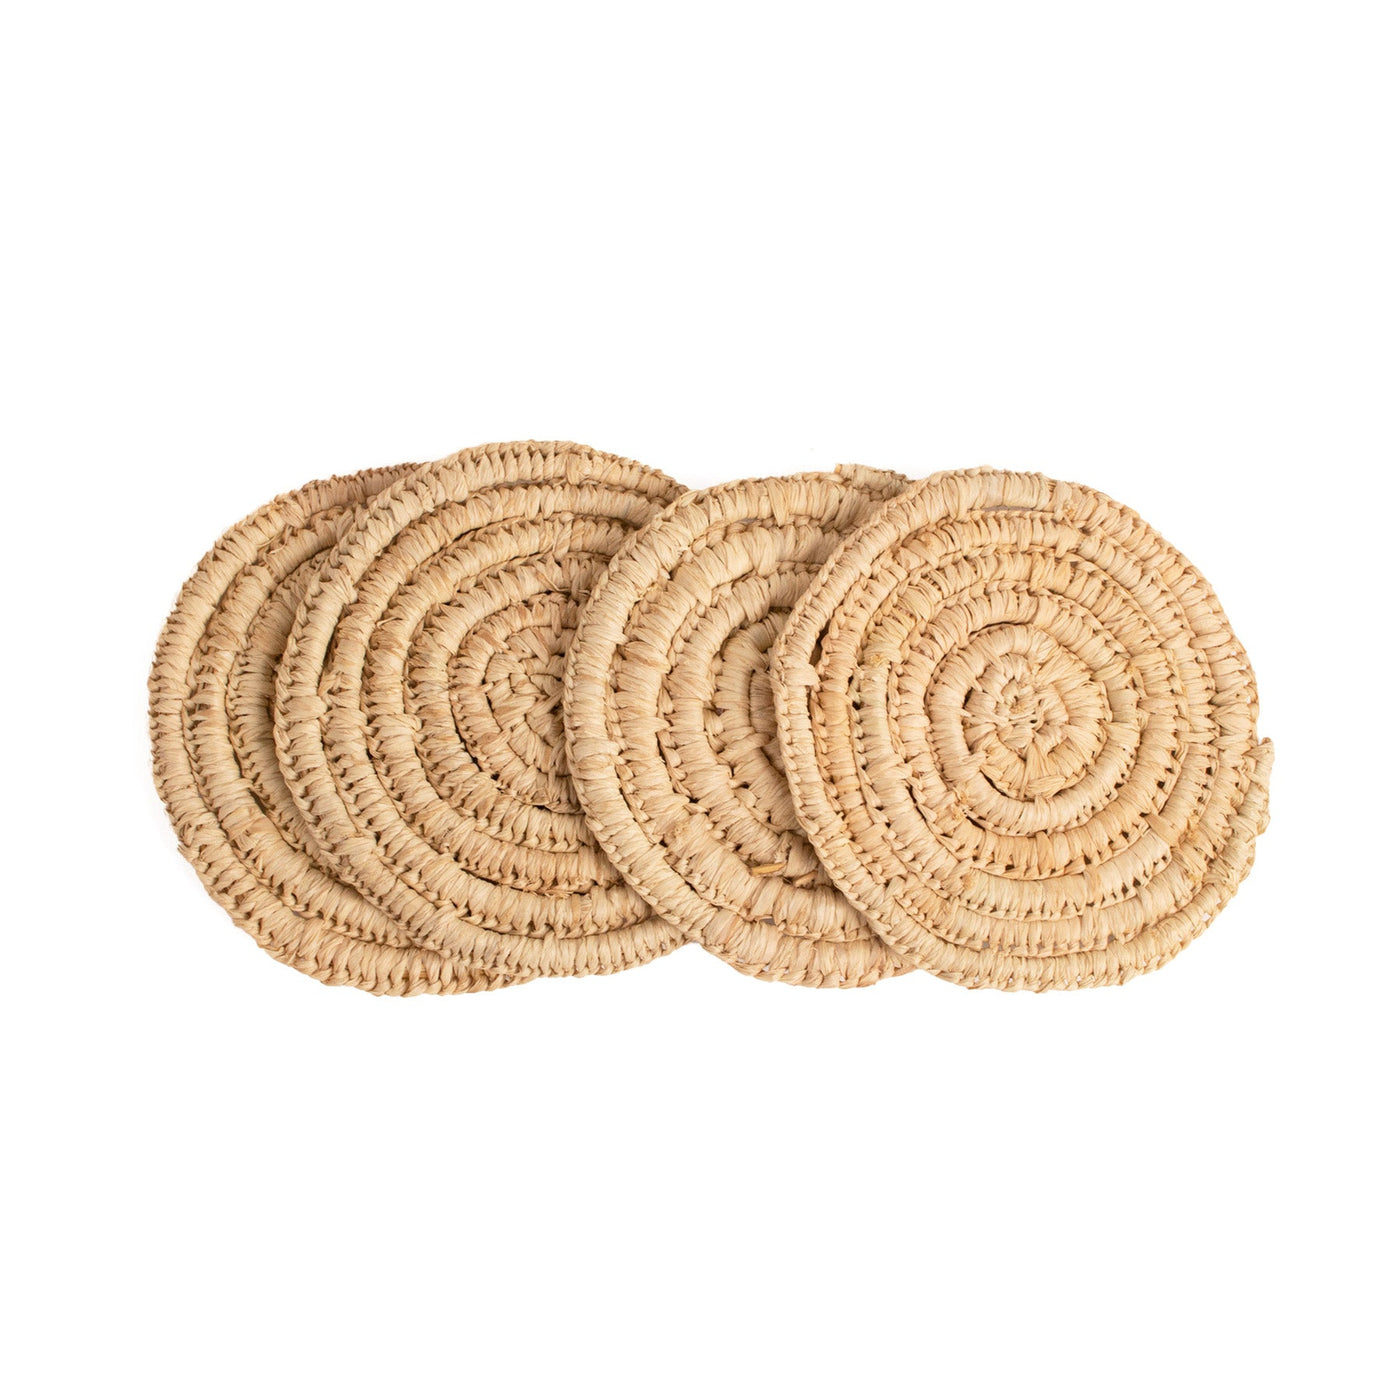 Stone Coasters - Natural Crochet, Set of 4